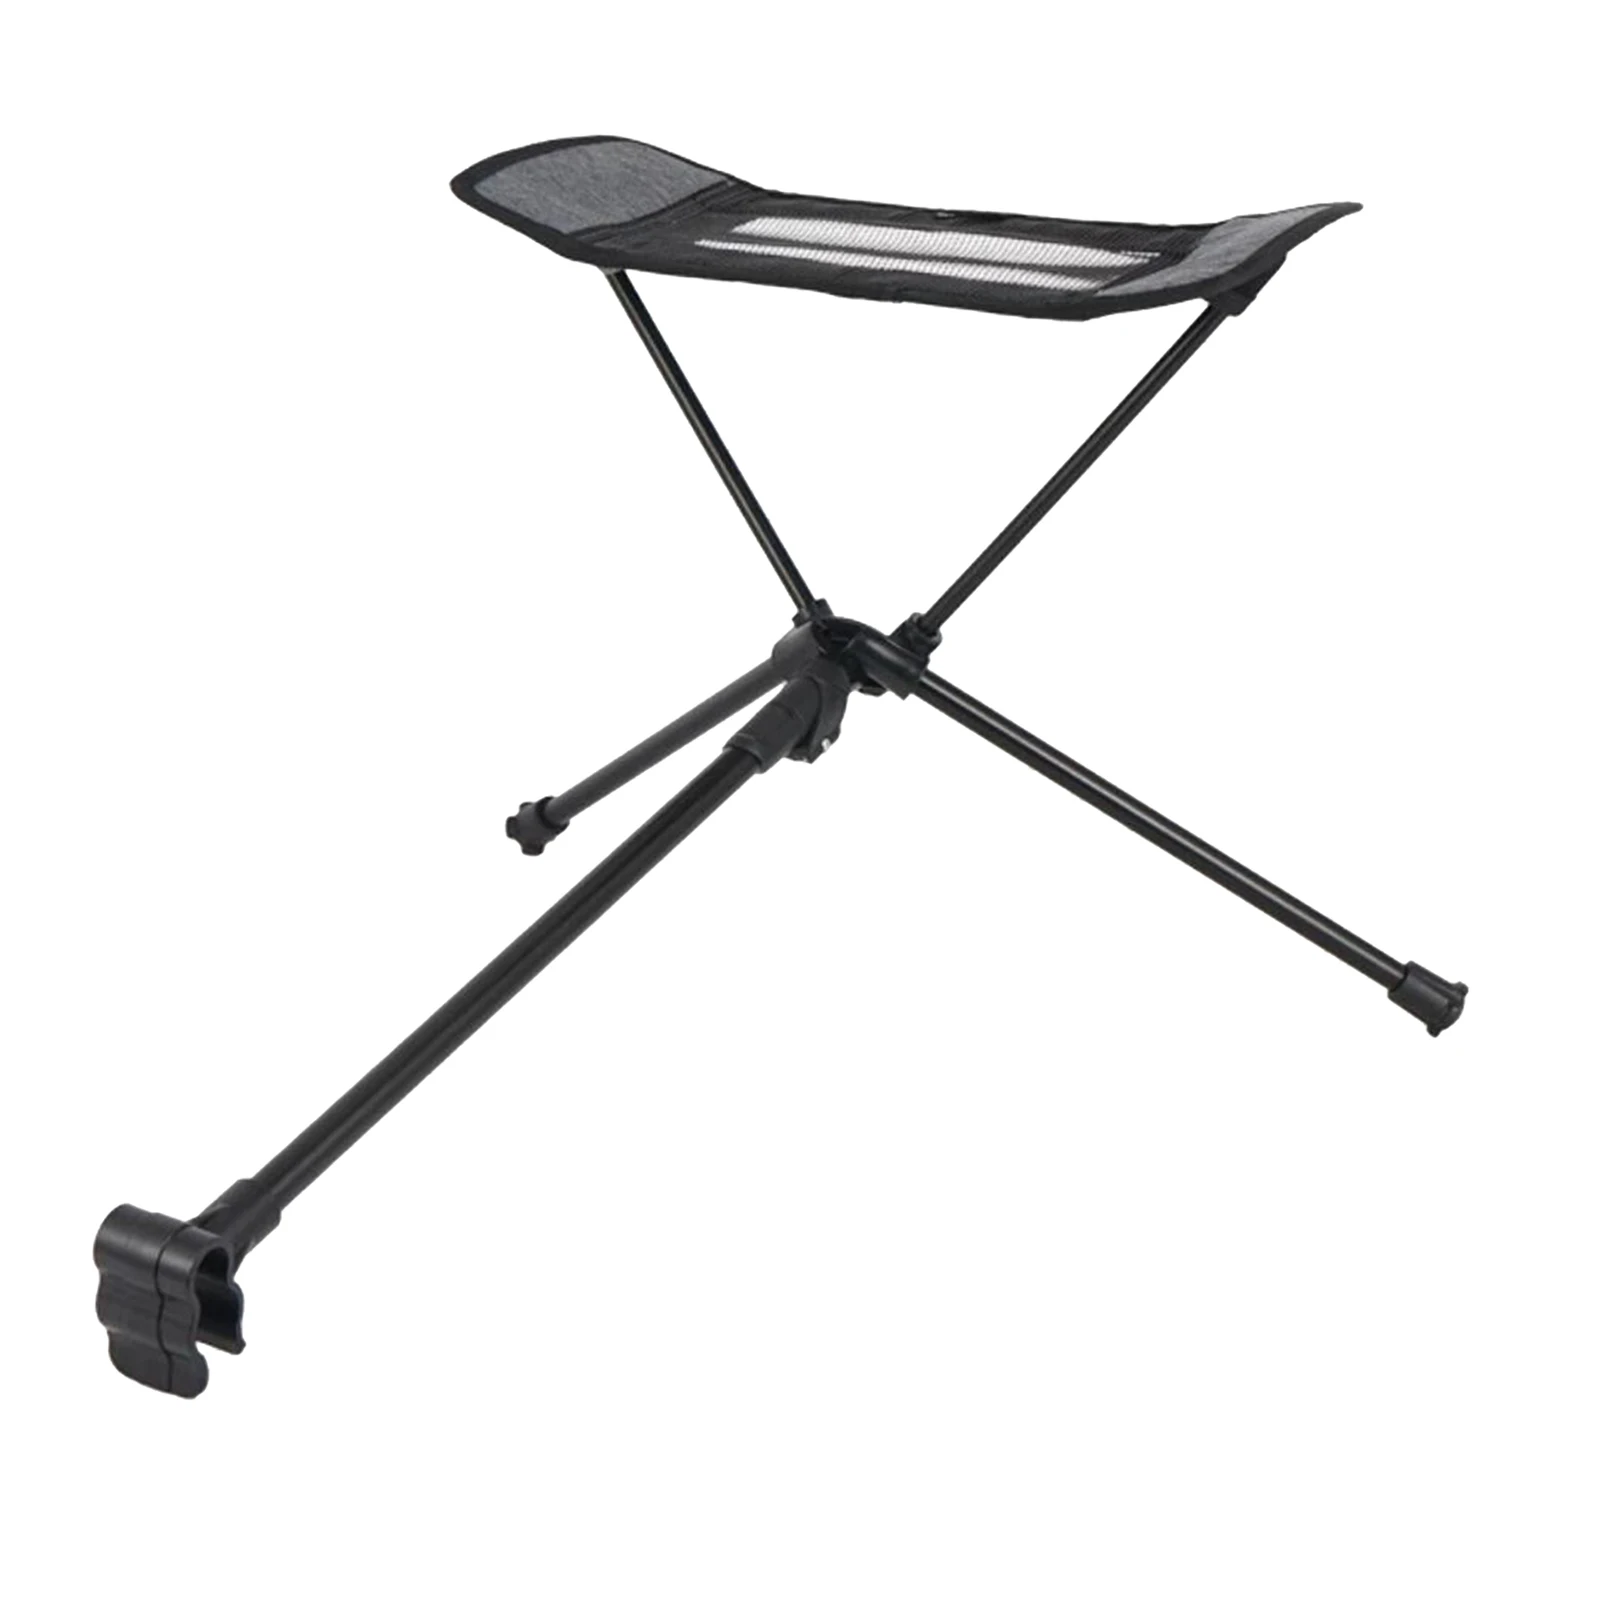 Lightweight Folding Chair Footrest, Anti-slip Camping Fishing Chair Footstool, Outdoor Patio Seat Feet Legs Rest Bracket Stool